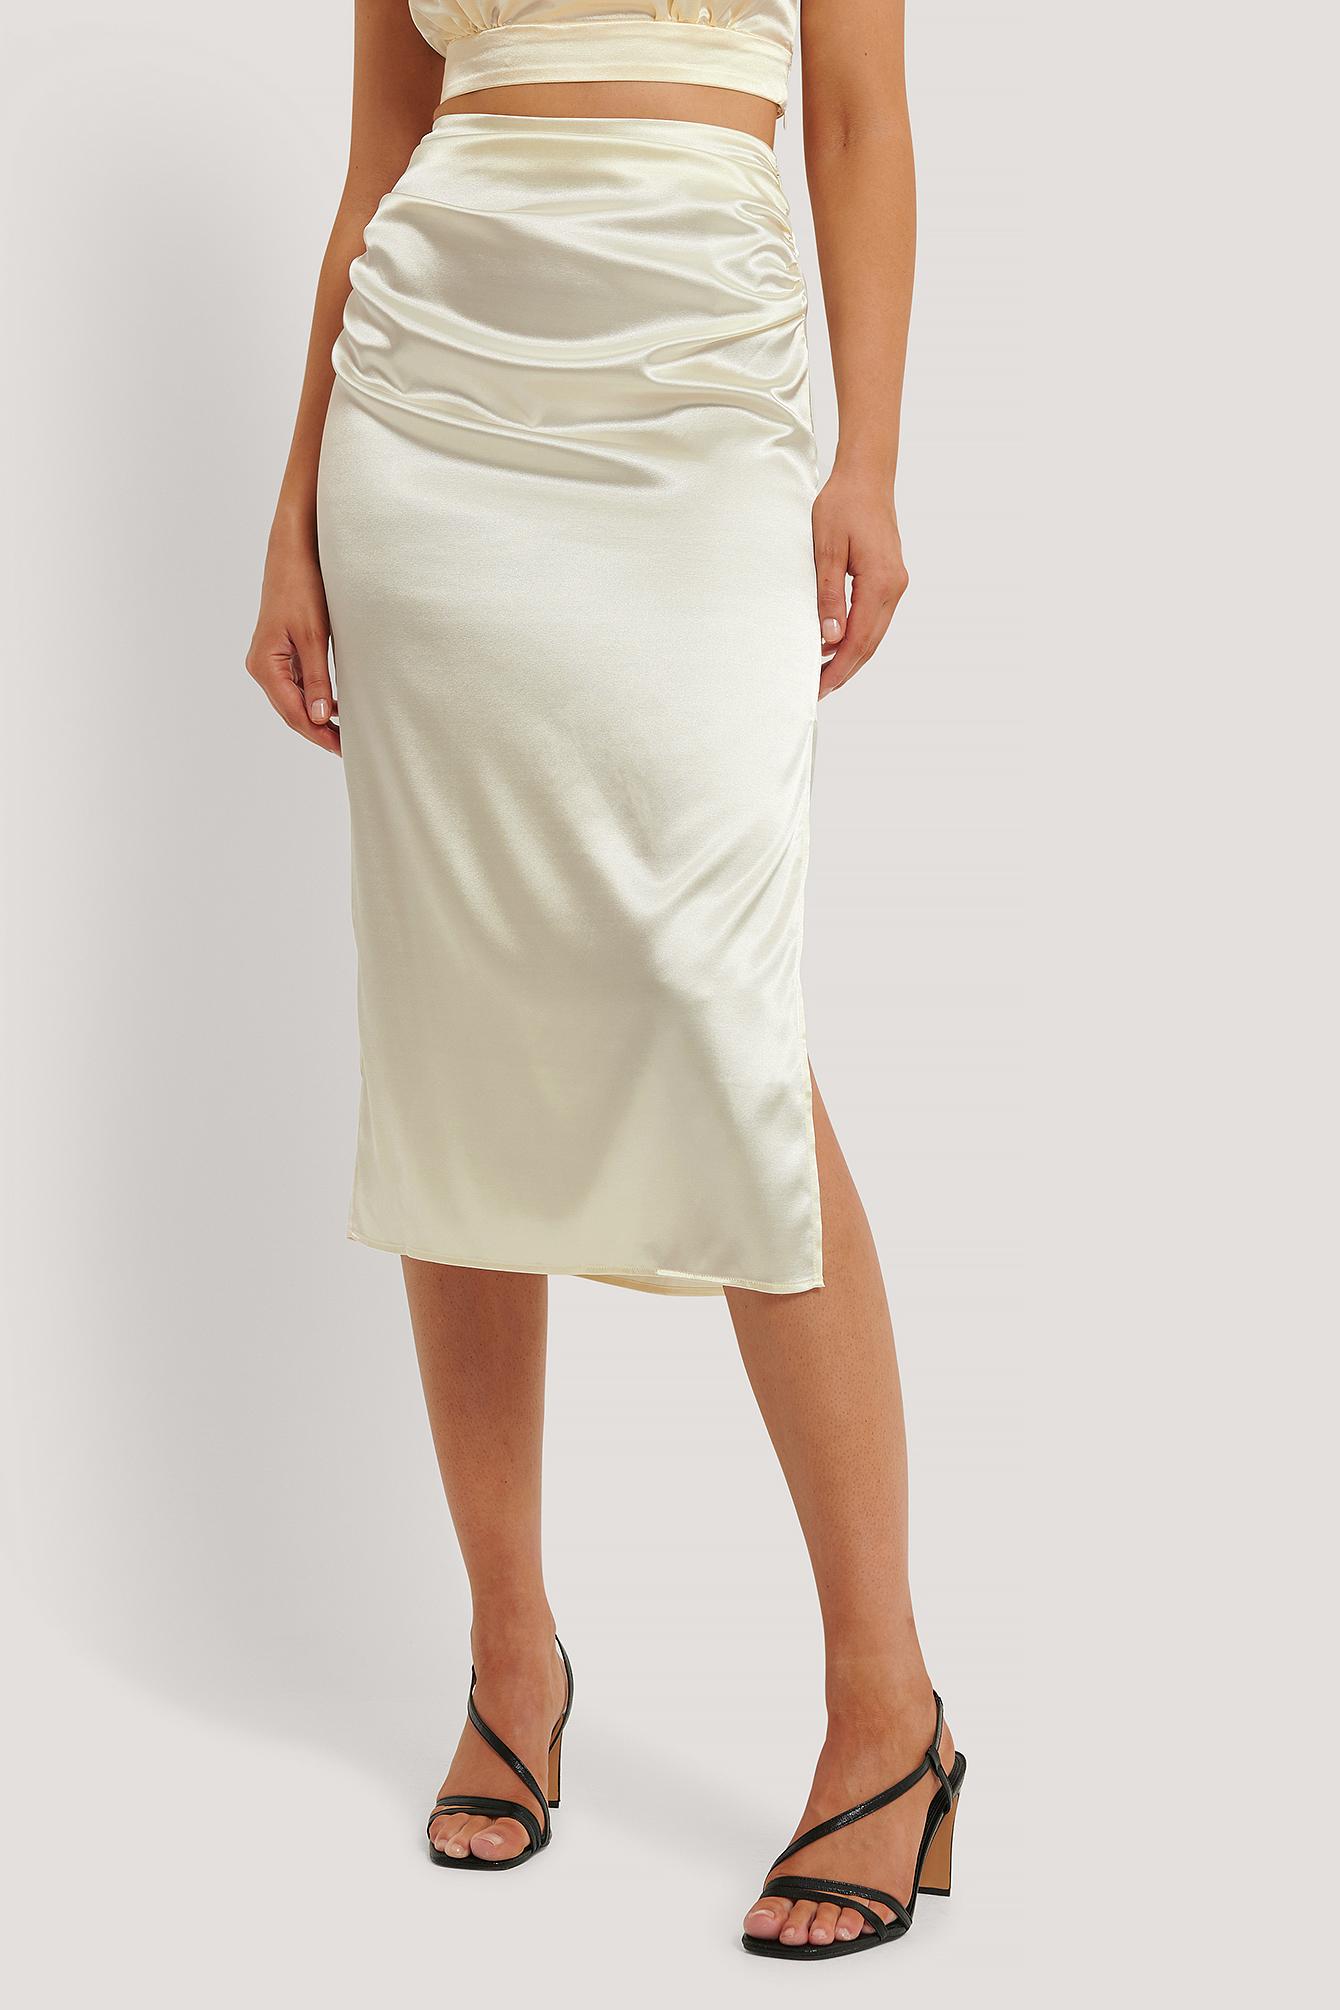 NA-KD Offwhite Side Slit Satin Skirt in Light Beige (Natural) - Lyst